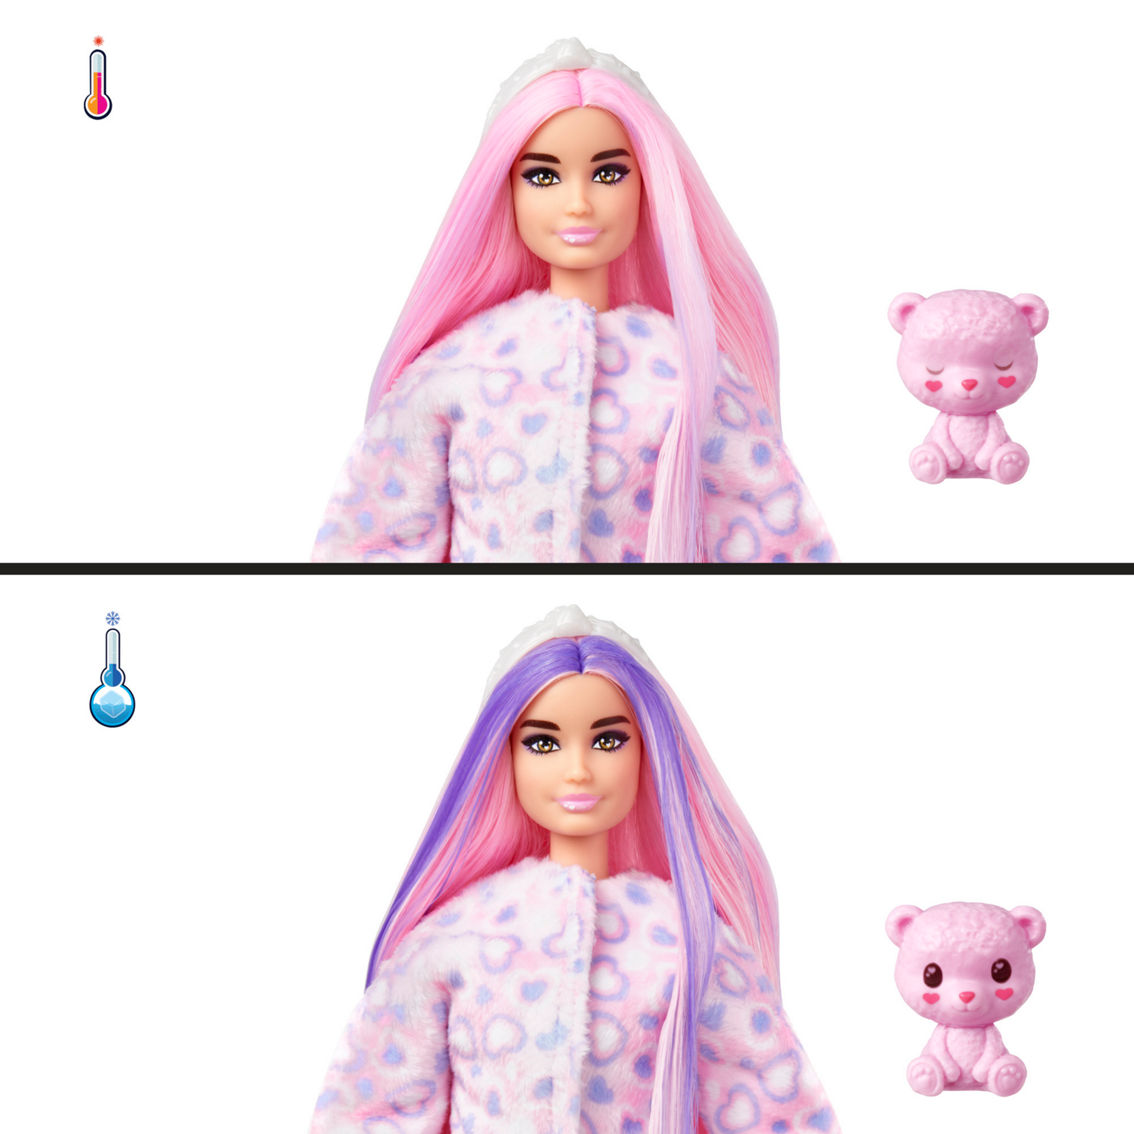 Original Barbie Color Reveal Fashion Reveal Doll Cutie Reveal Cute